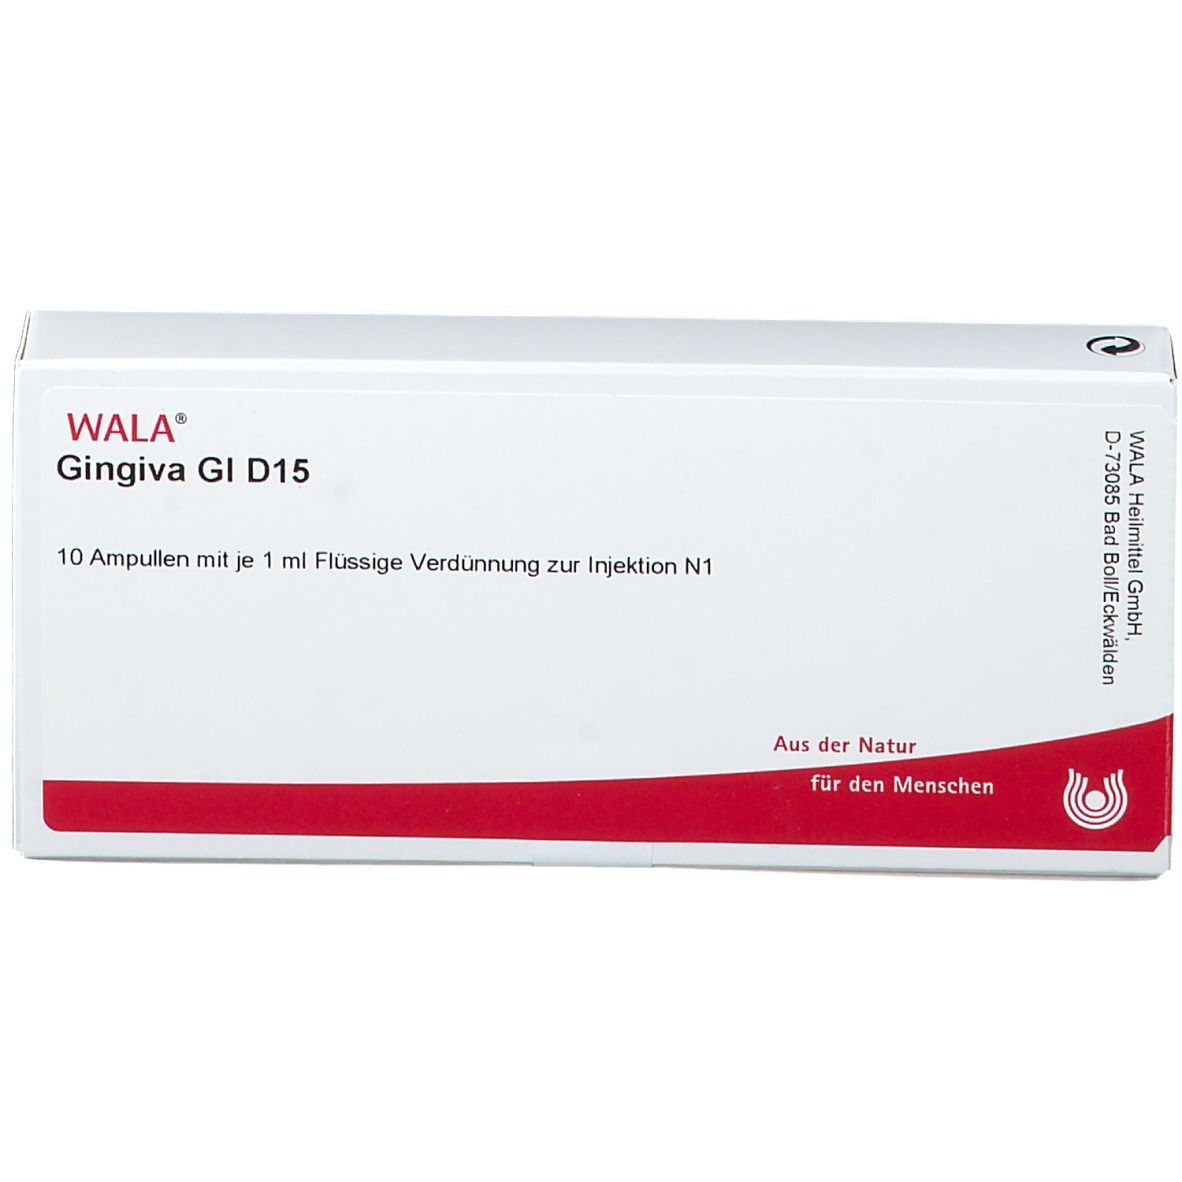 WALA® Gingiva Gl D 15